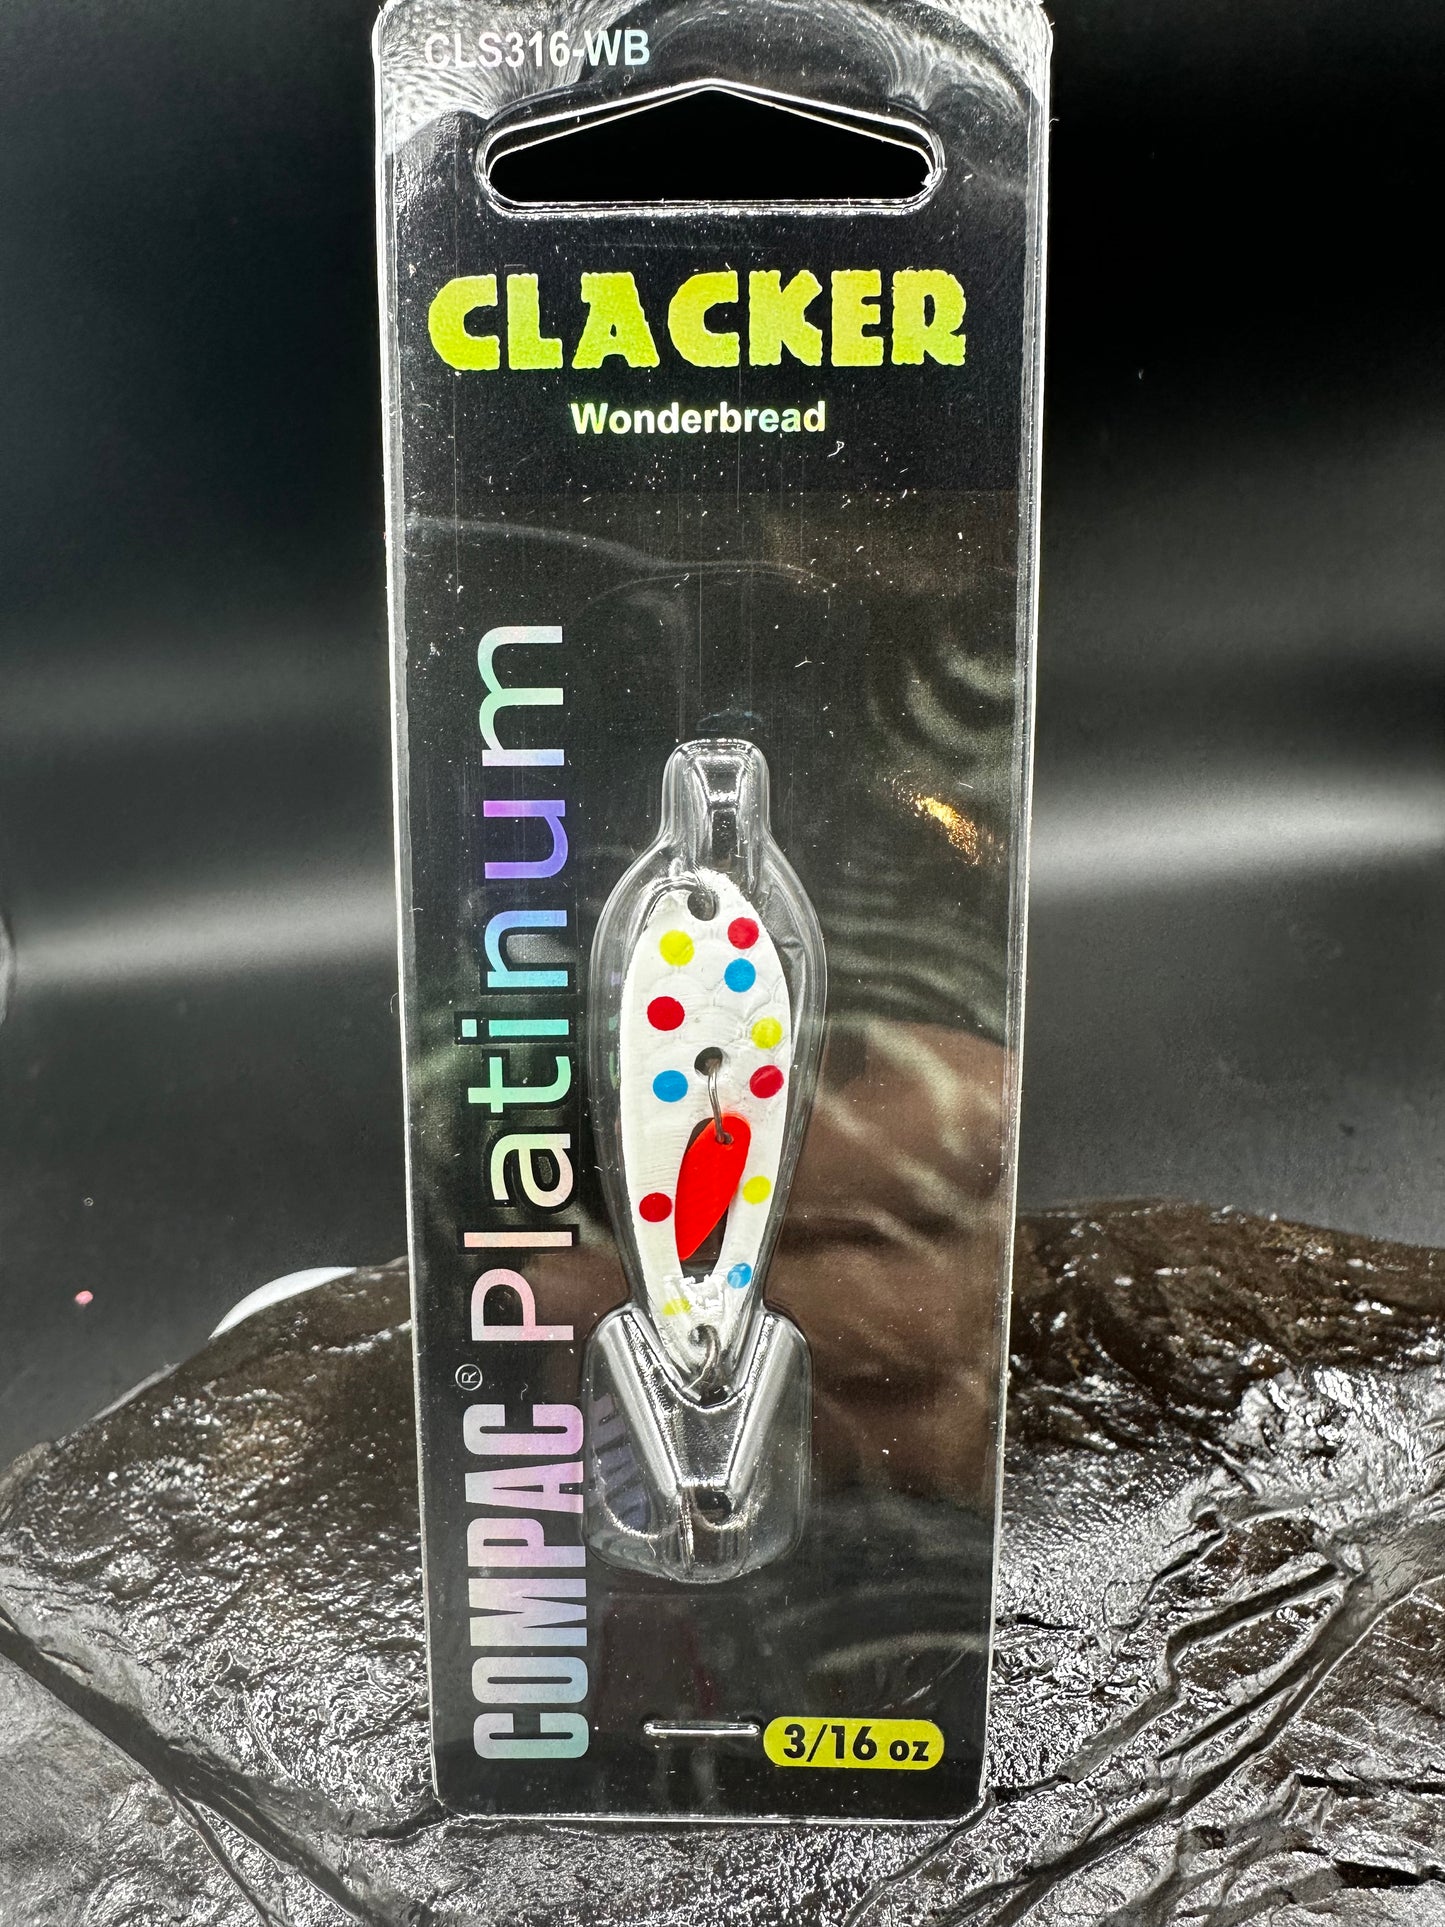 The Clacker Spoon